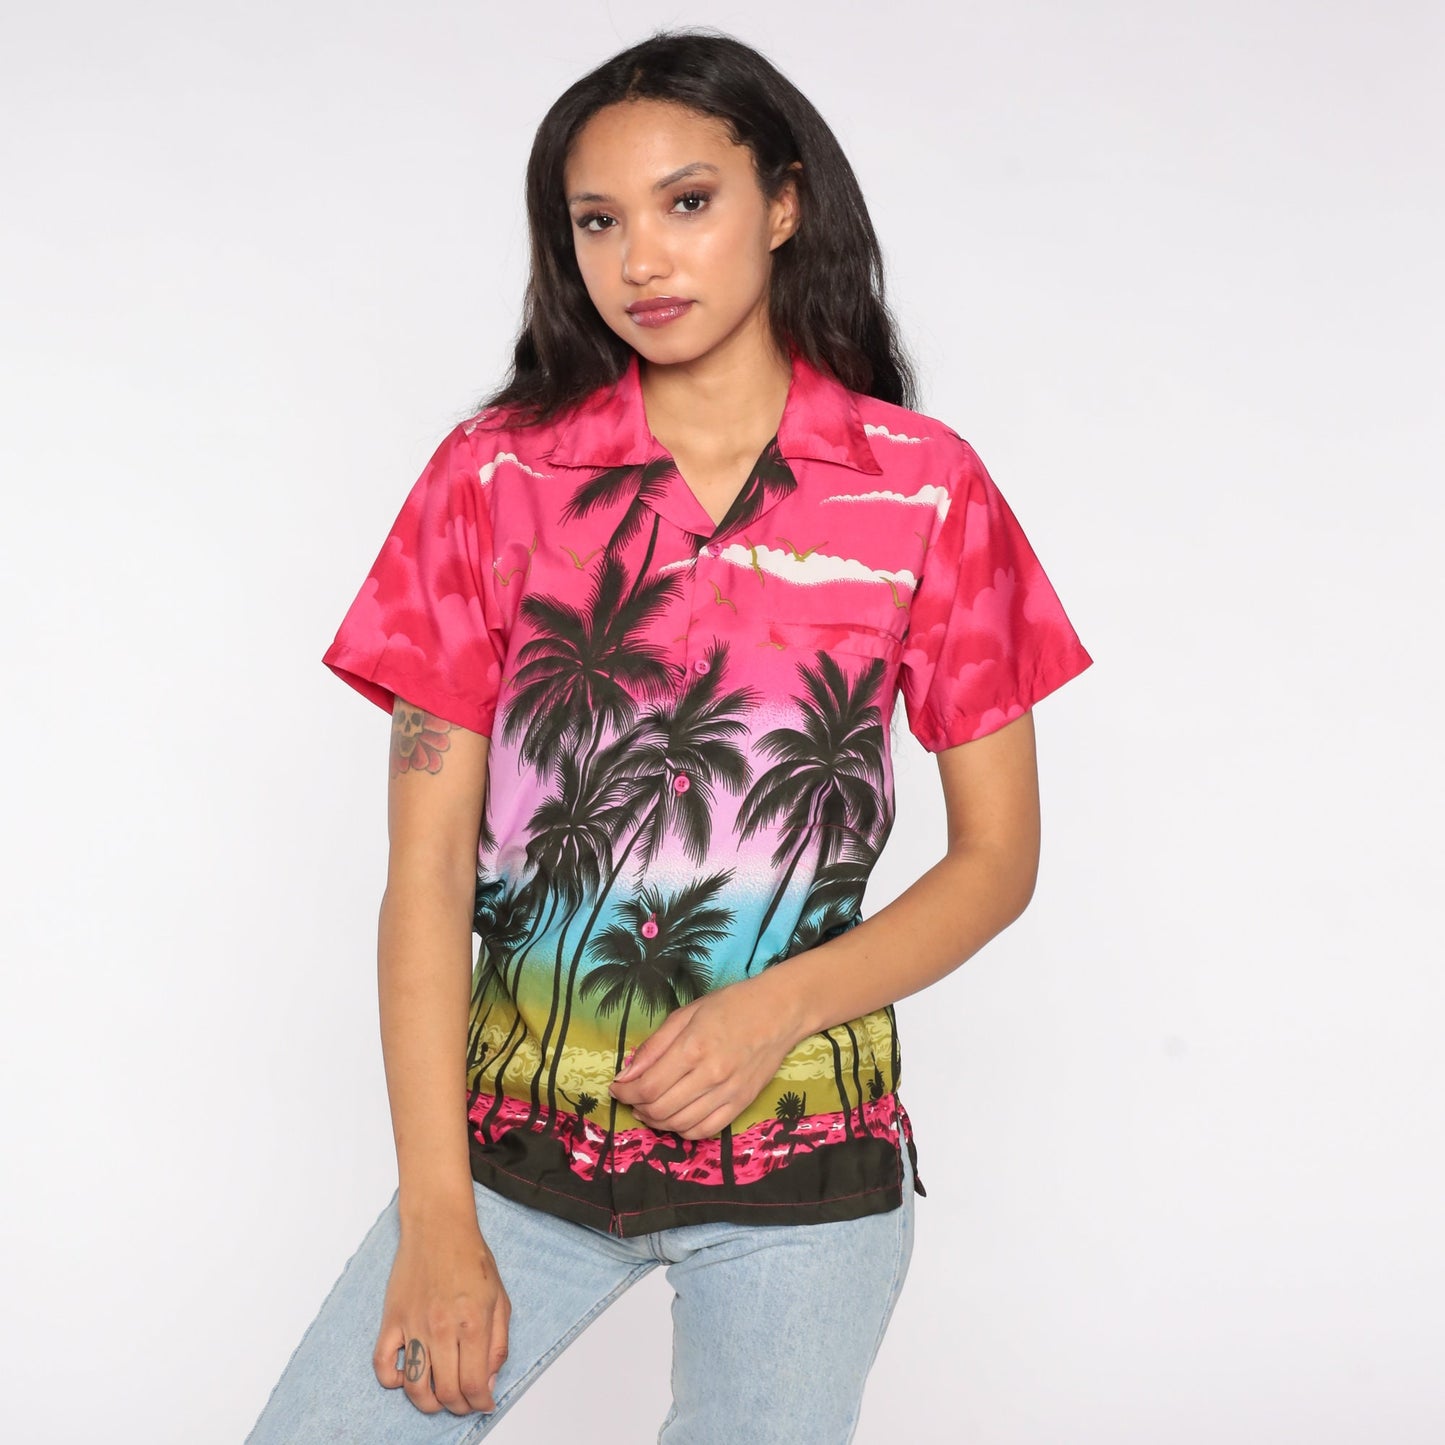 80s Hawaiian Shirt Palm Tree Luau Dancer Sunset Print Button Up Tropical Pink Blue 1980s Top Vintage Short Sleeve Seagull Tourist Small S